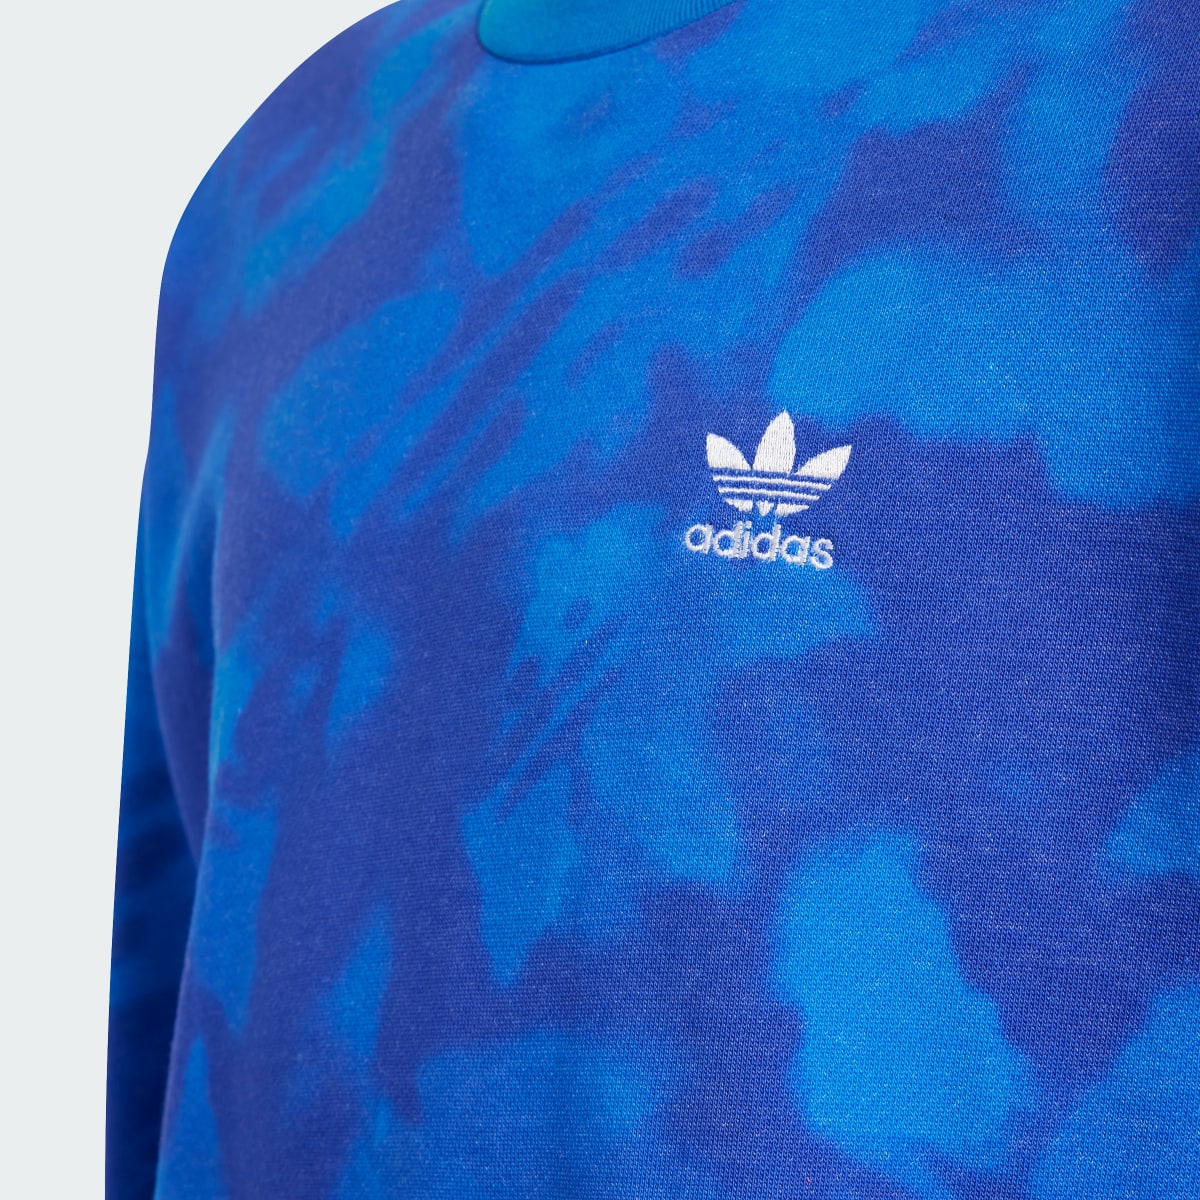 Adidas Summer Allover Print Crew Sweatshirt. 4